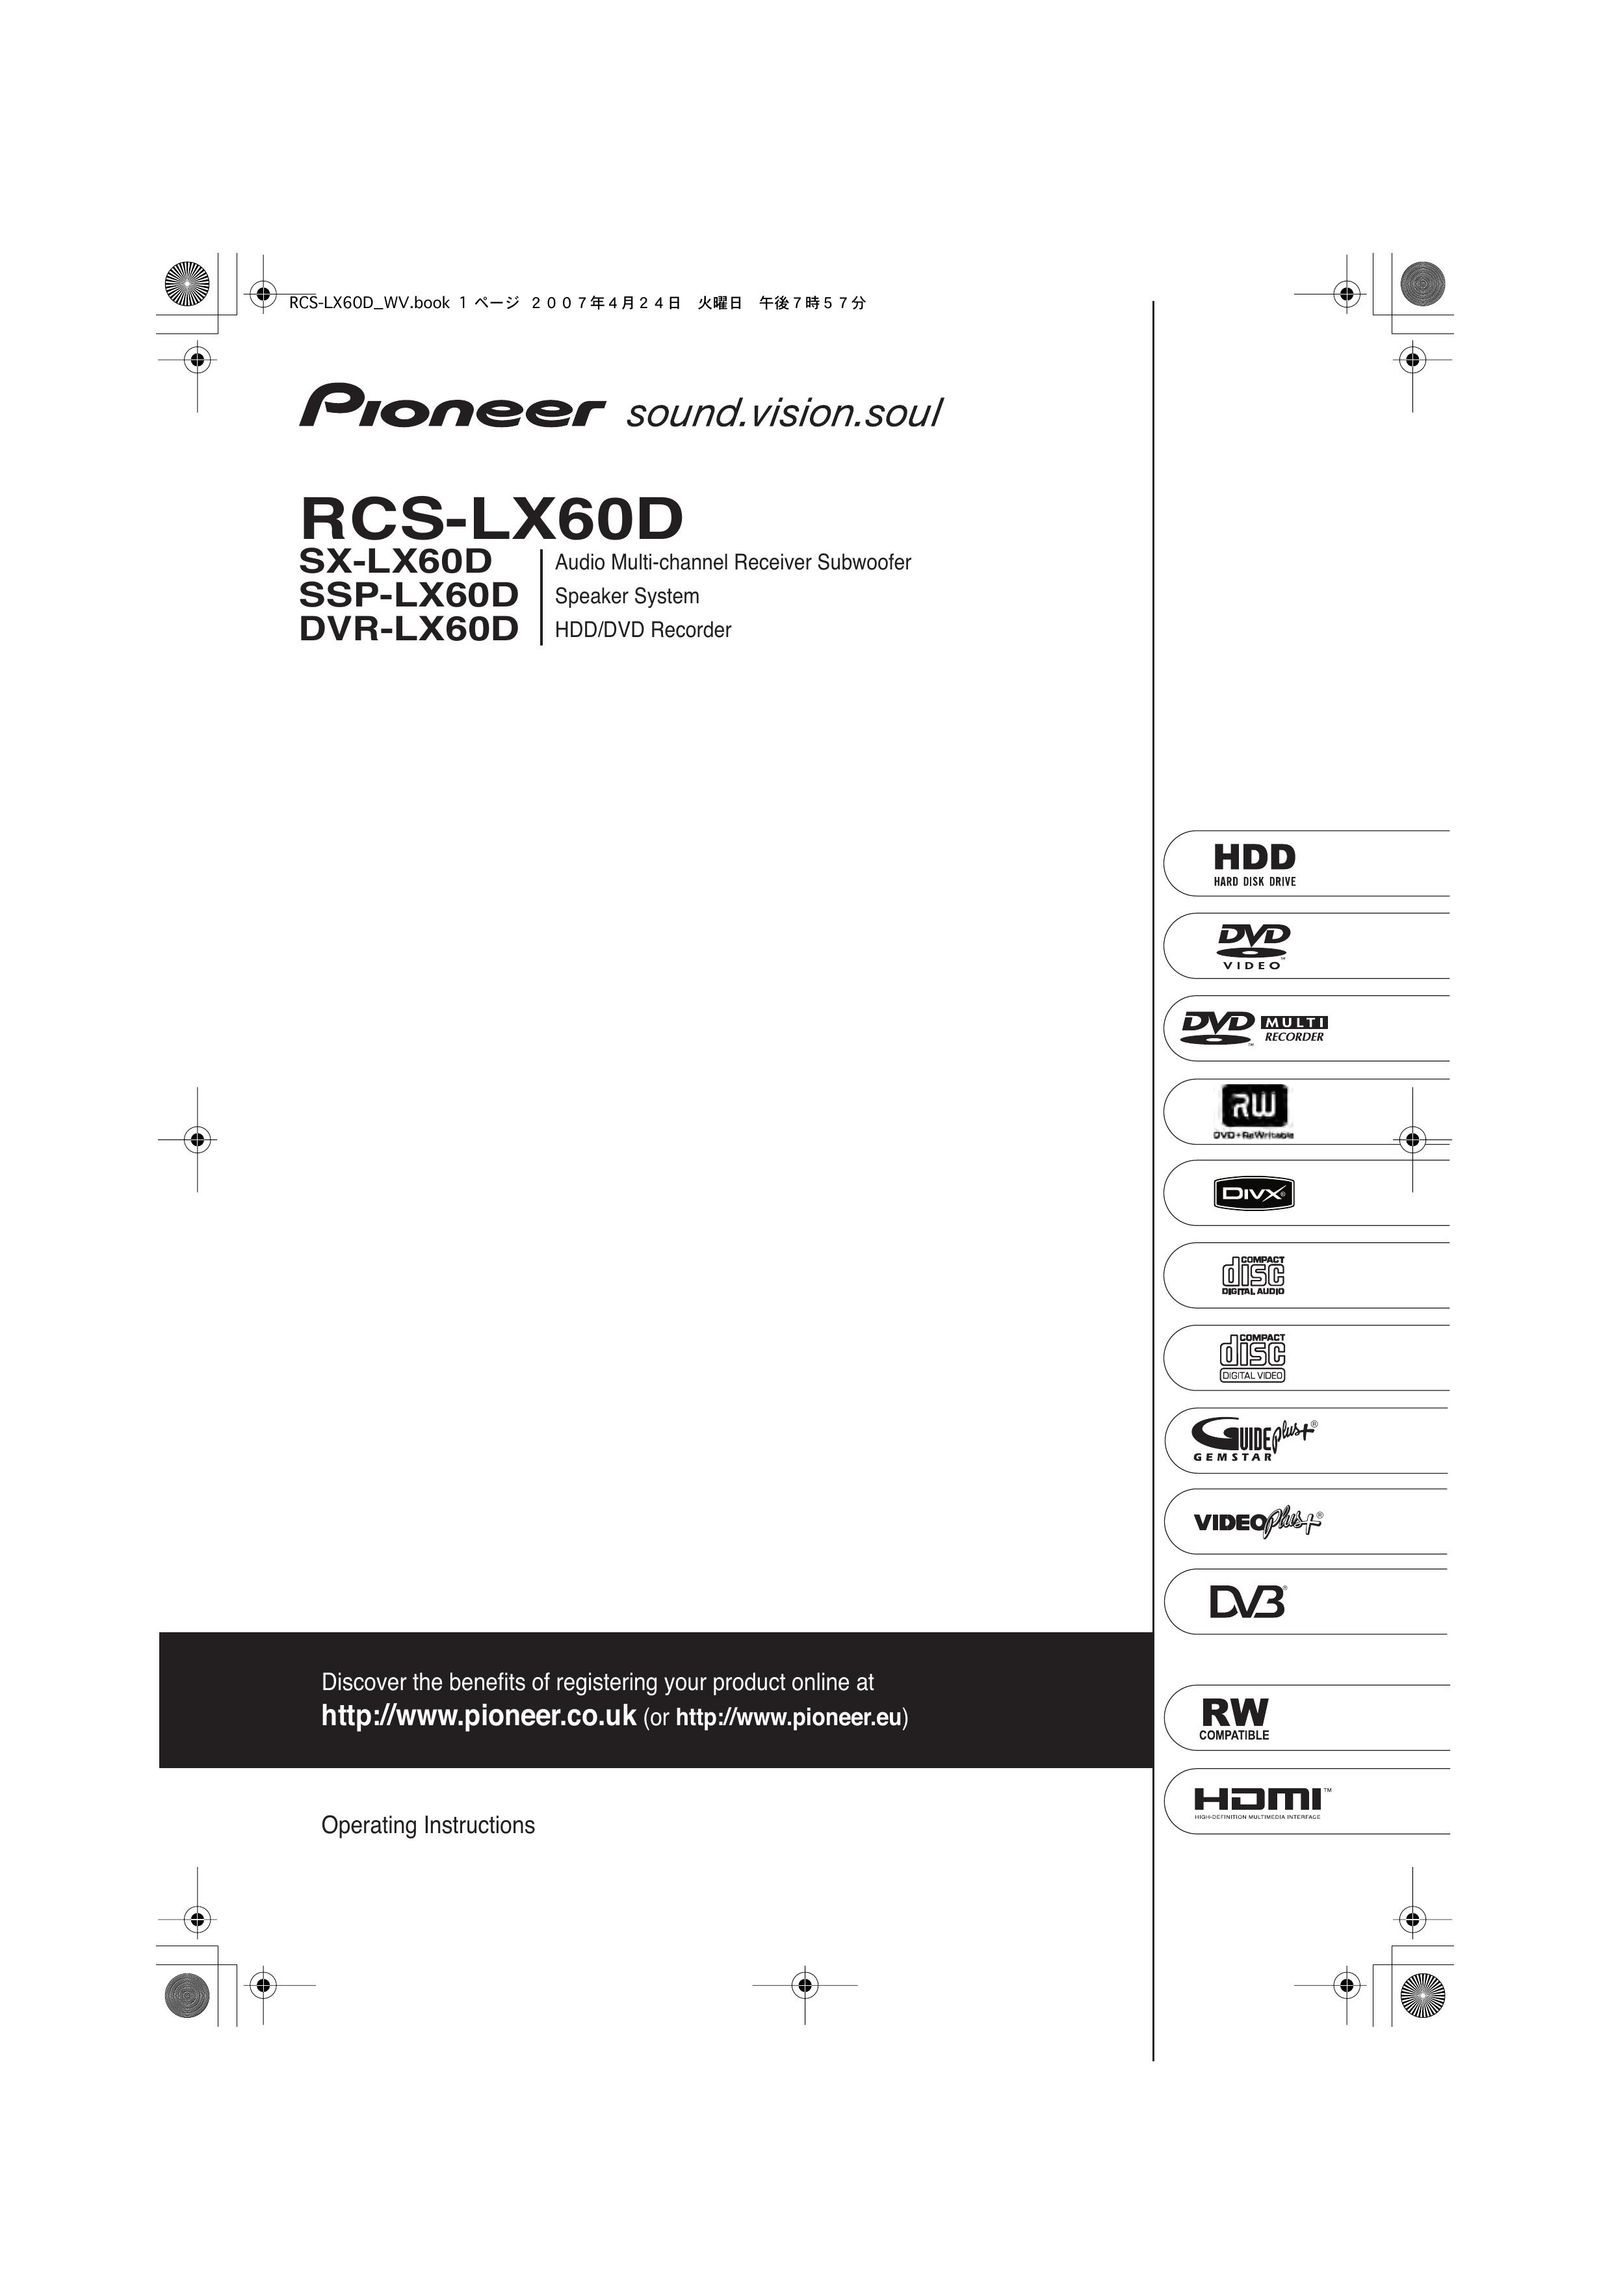 Pioneer SSP-LX60D DVR User Manual